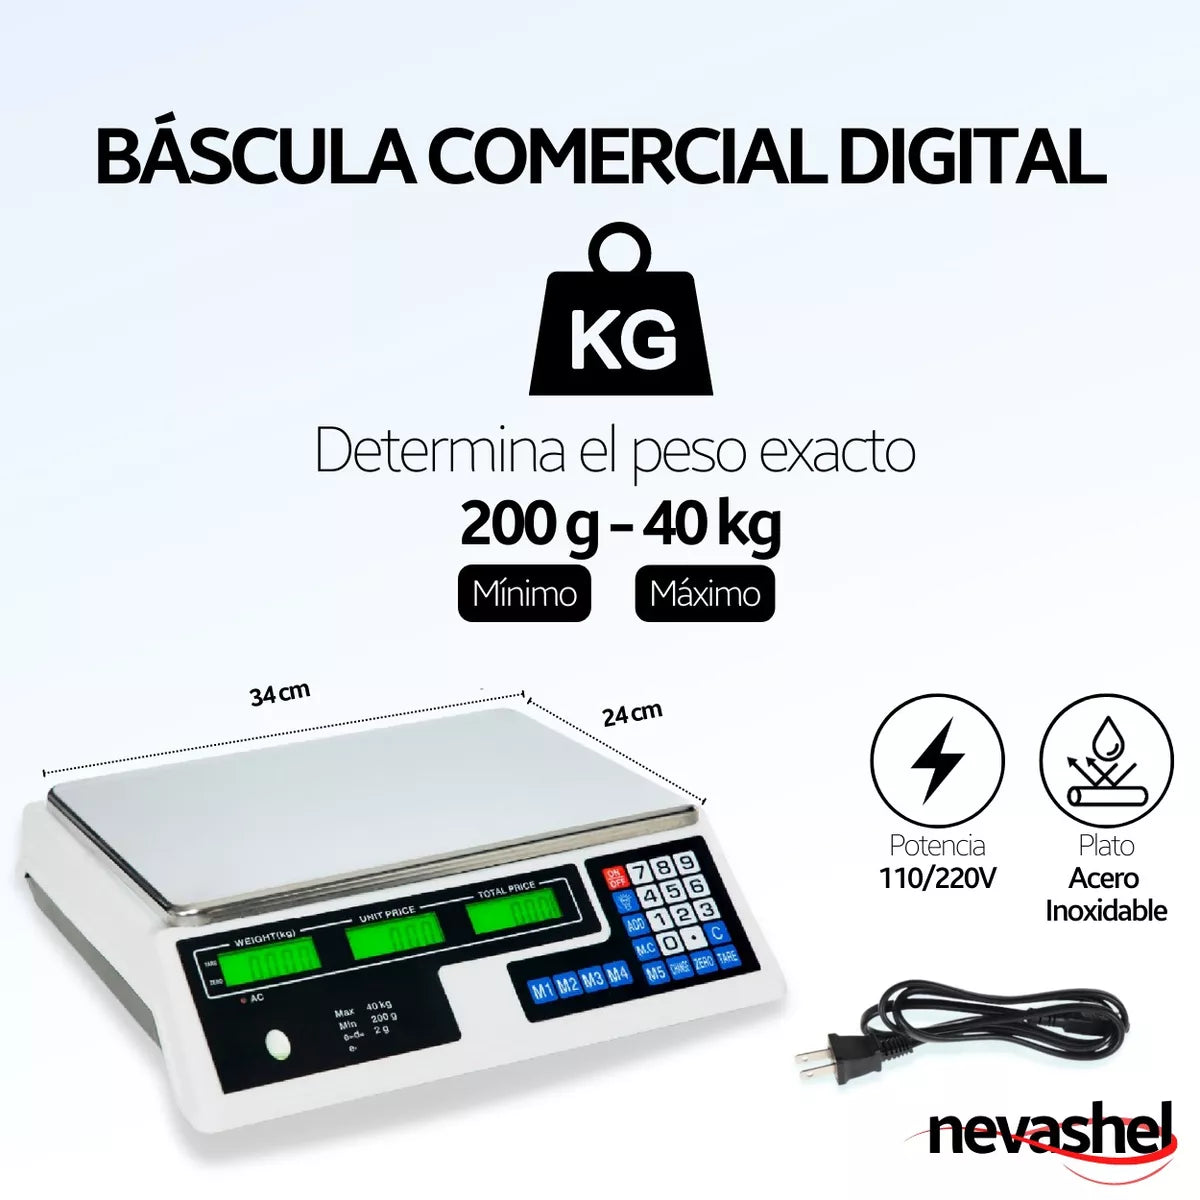 Bascula Comercial Digital 40kg [Open box] [Ml2]